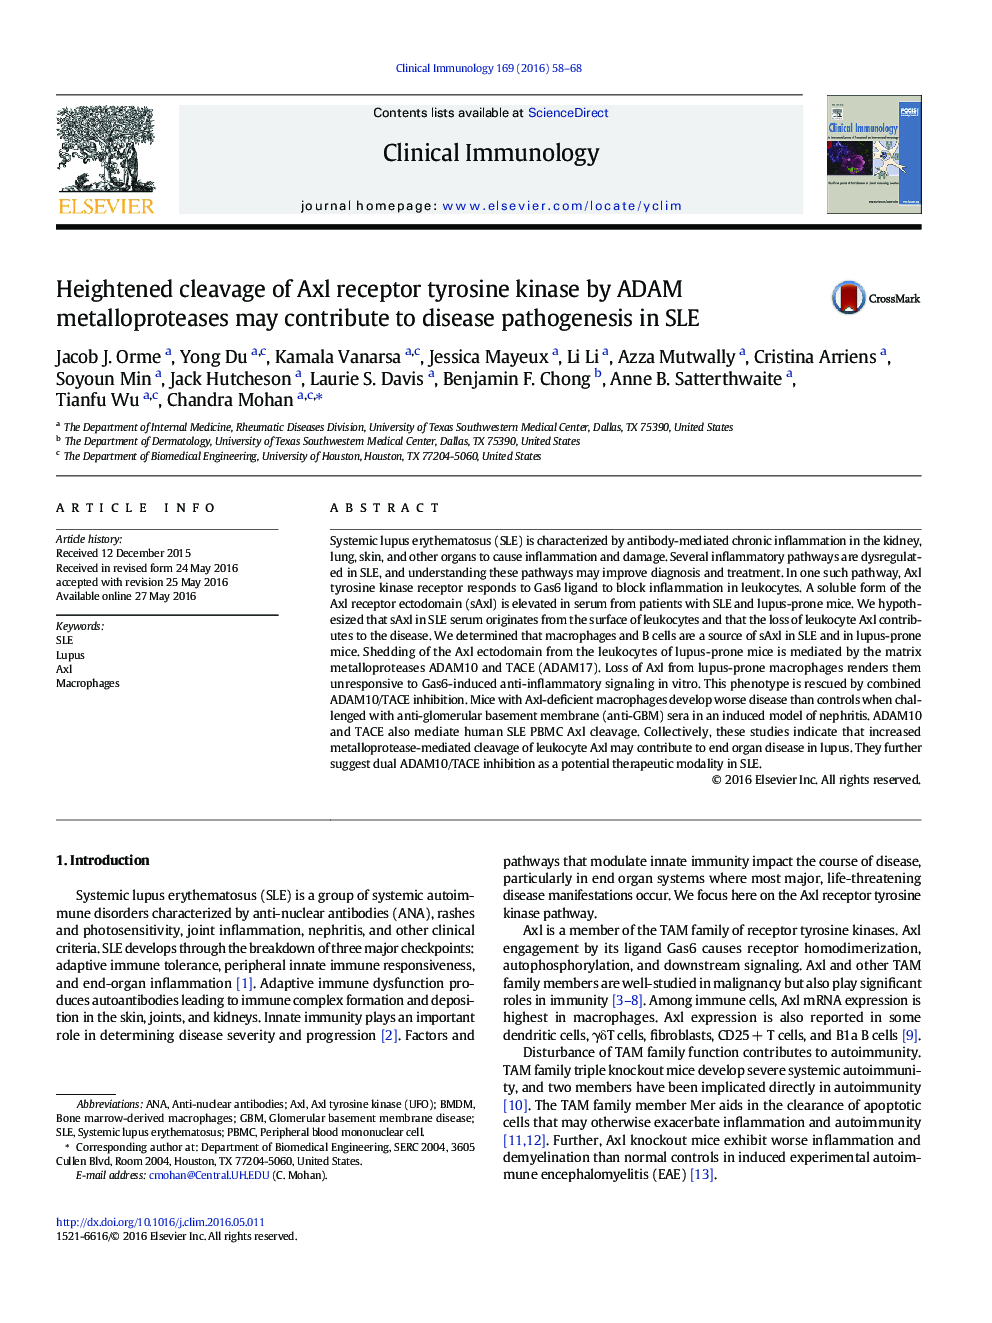 Heightened cleavage of Axl receptor tyrosine kinase by ADAM metalloproteases may contribute to disease pathogenesis in SLE